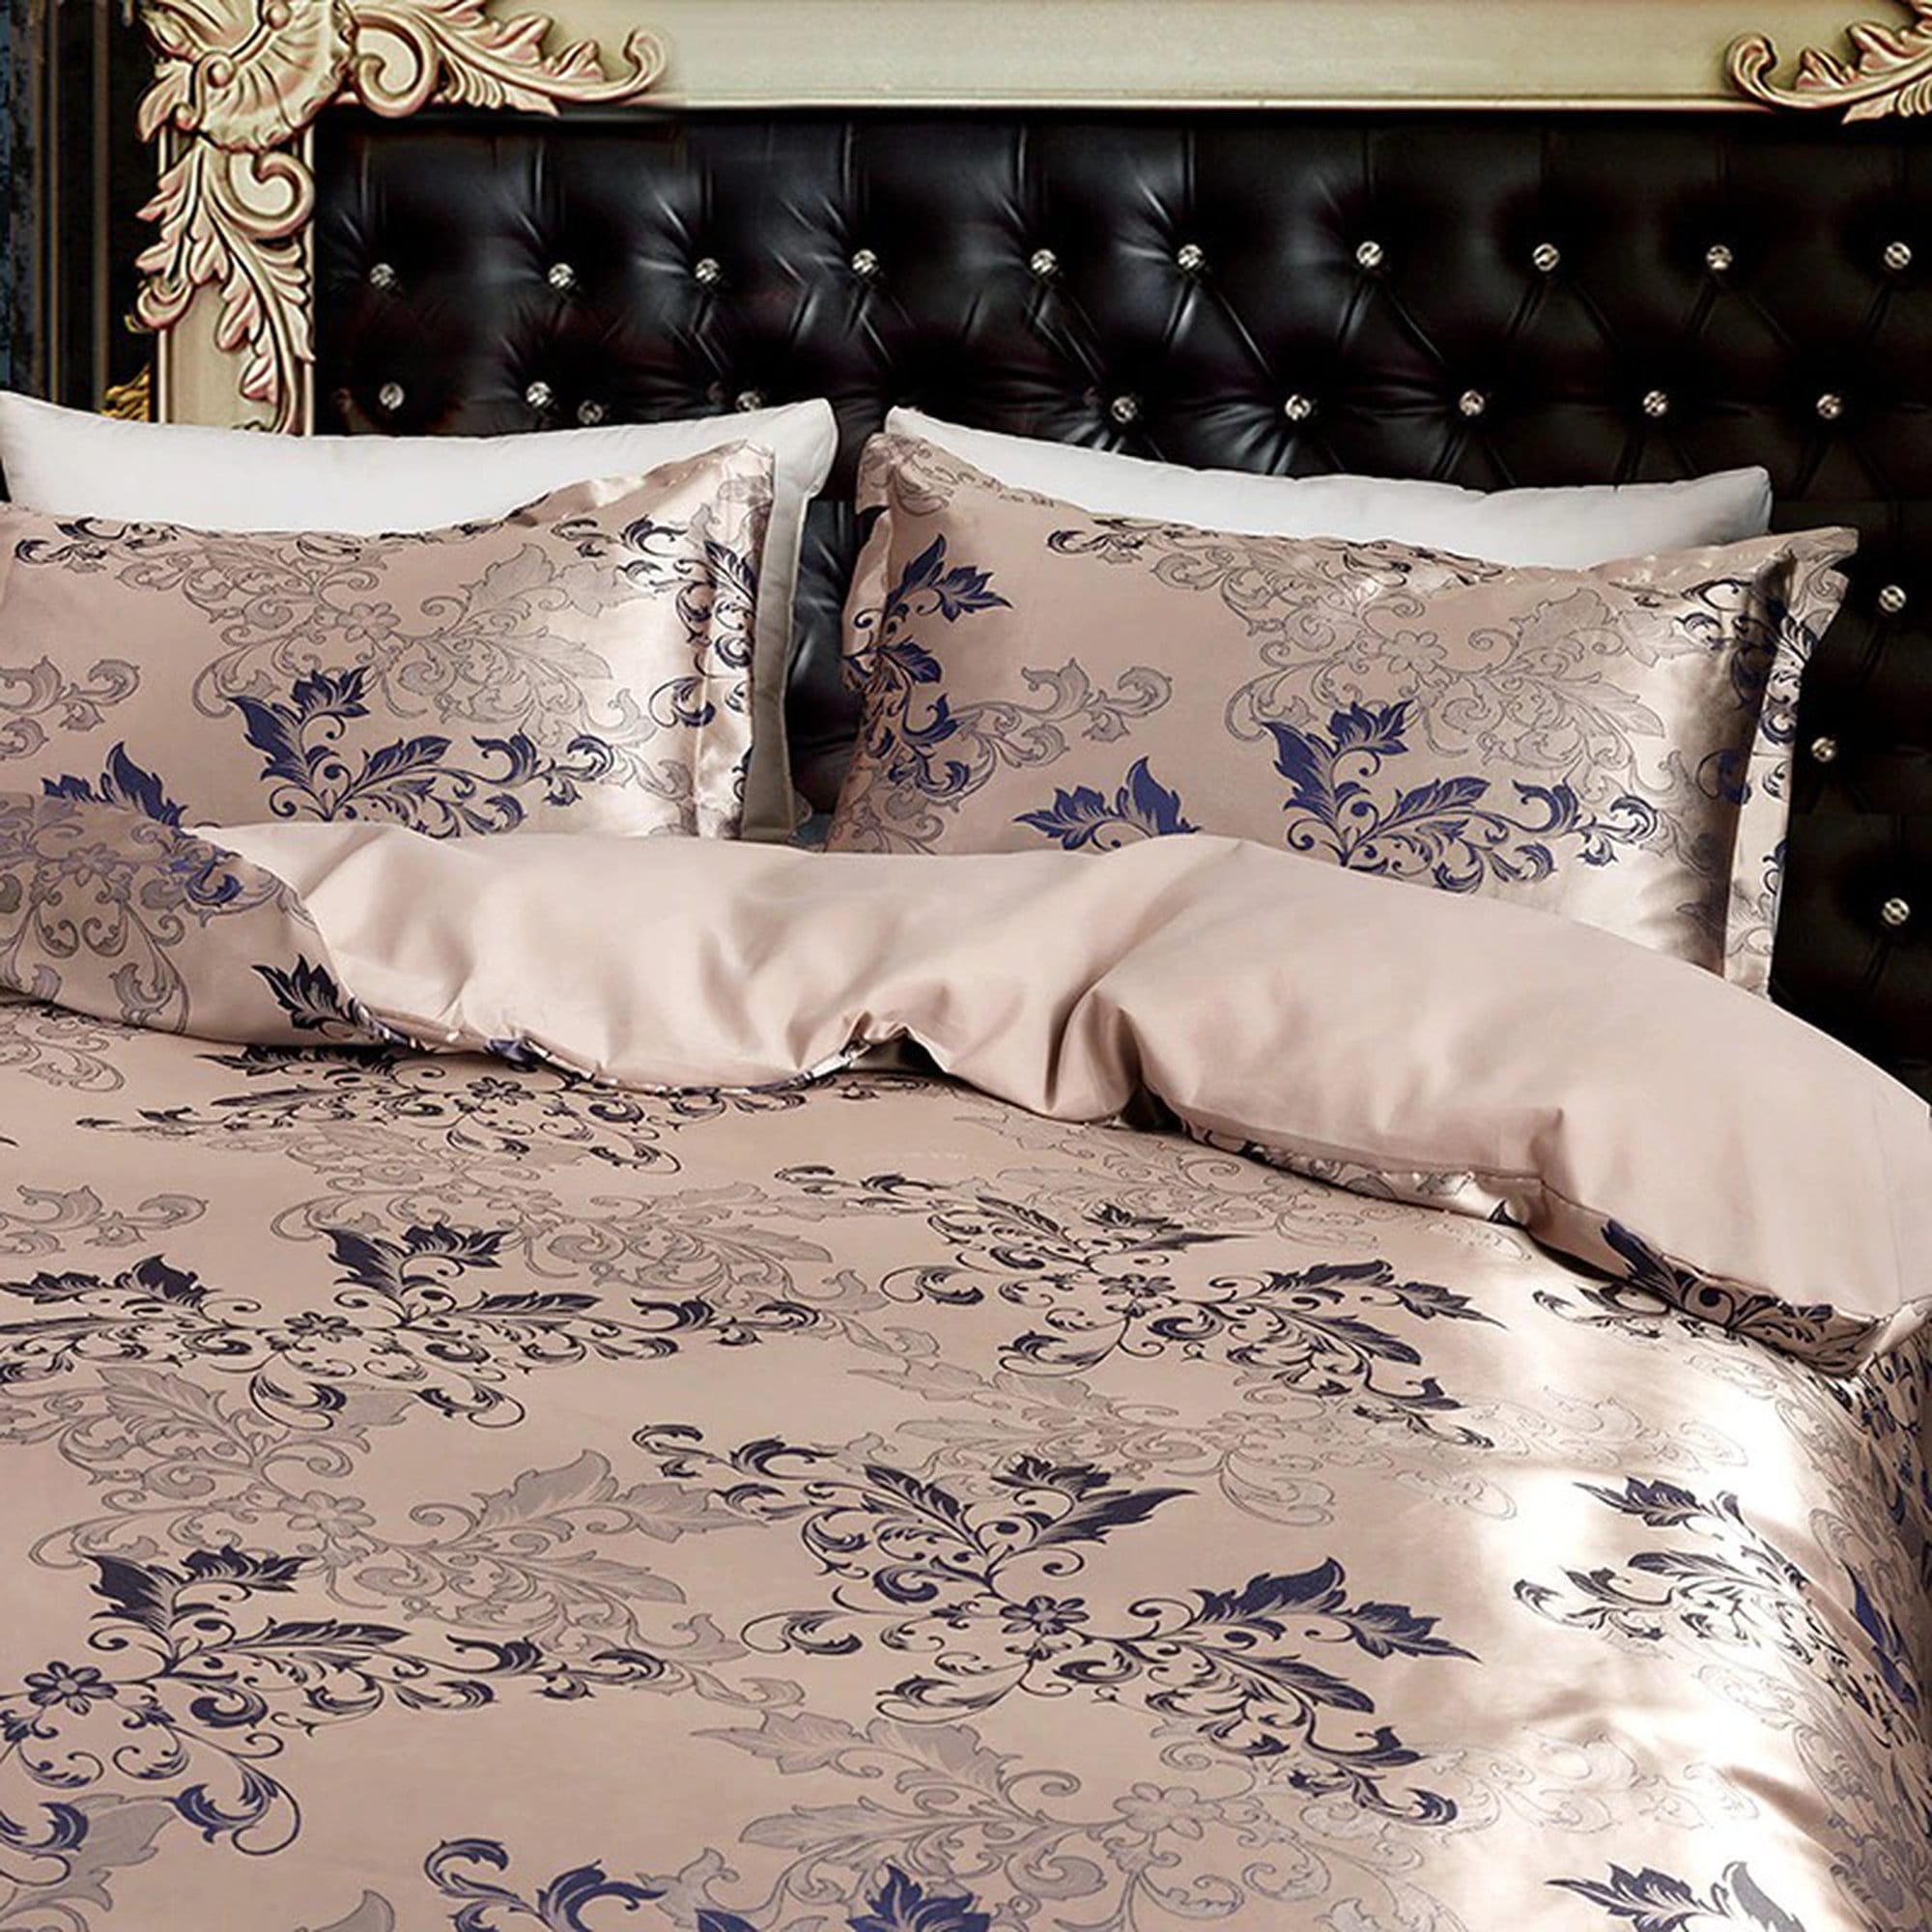 daintyduvet Luxury Bedding in Rose Gold Jacquard Fabric Blue Embroidery, Damask Duvet Cover Set, Designer Bedding, Aesthetic Duvet King Queen Full Twin